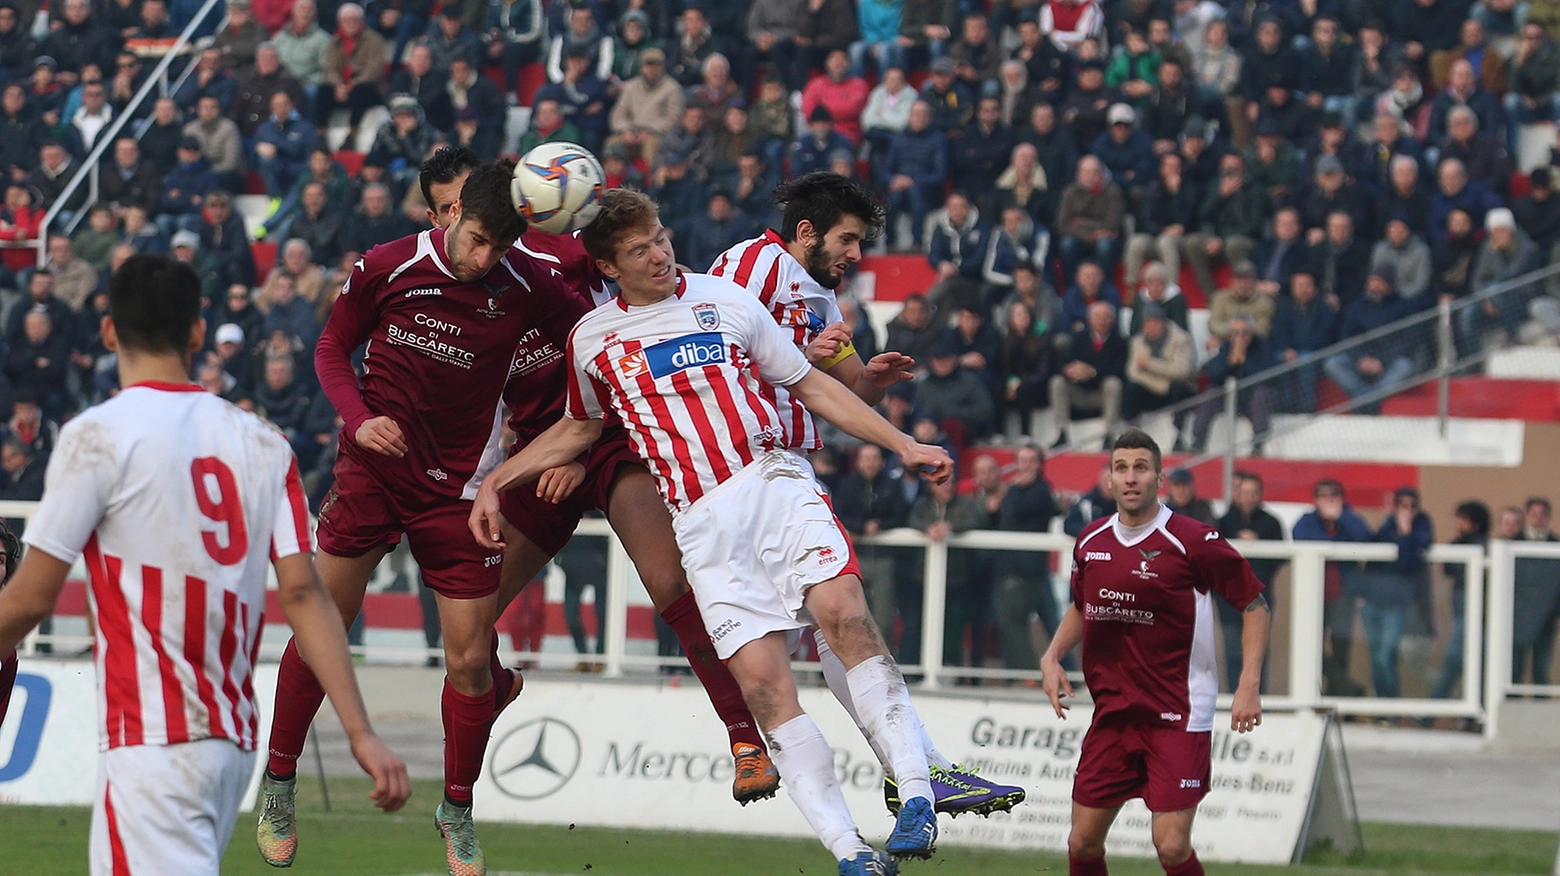 Il derby Vis Pesaro -Fano (Fotoprint)